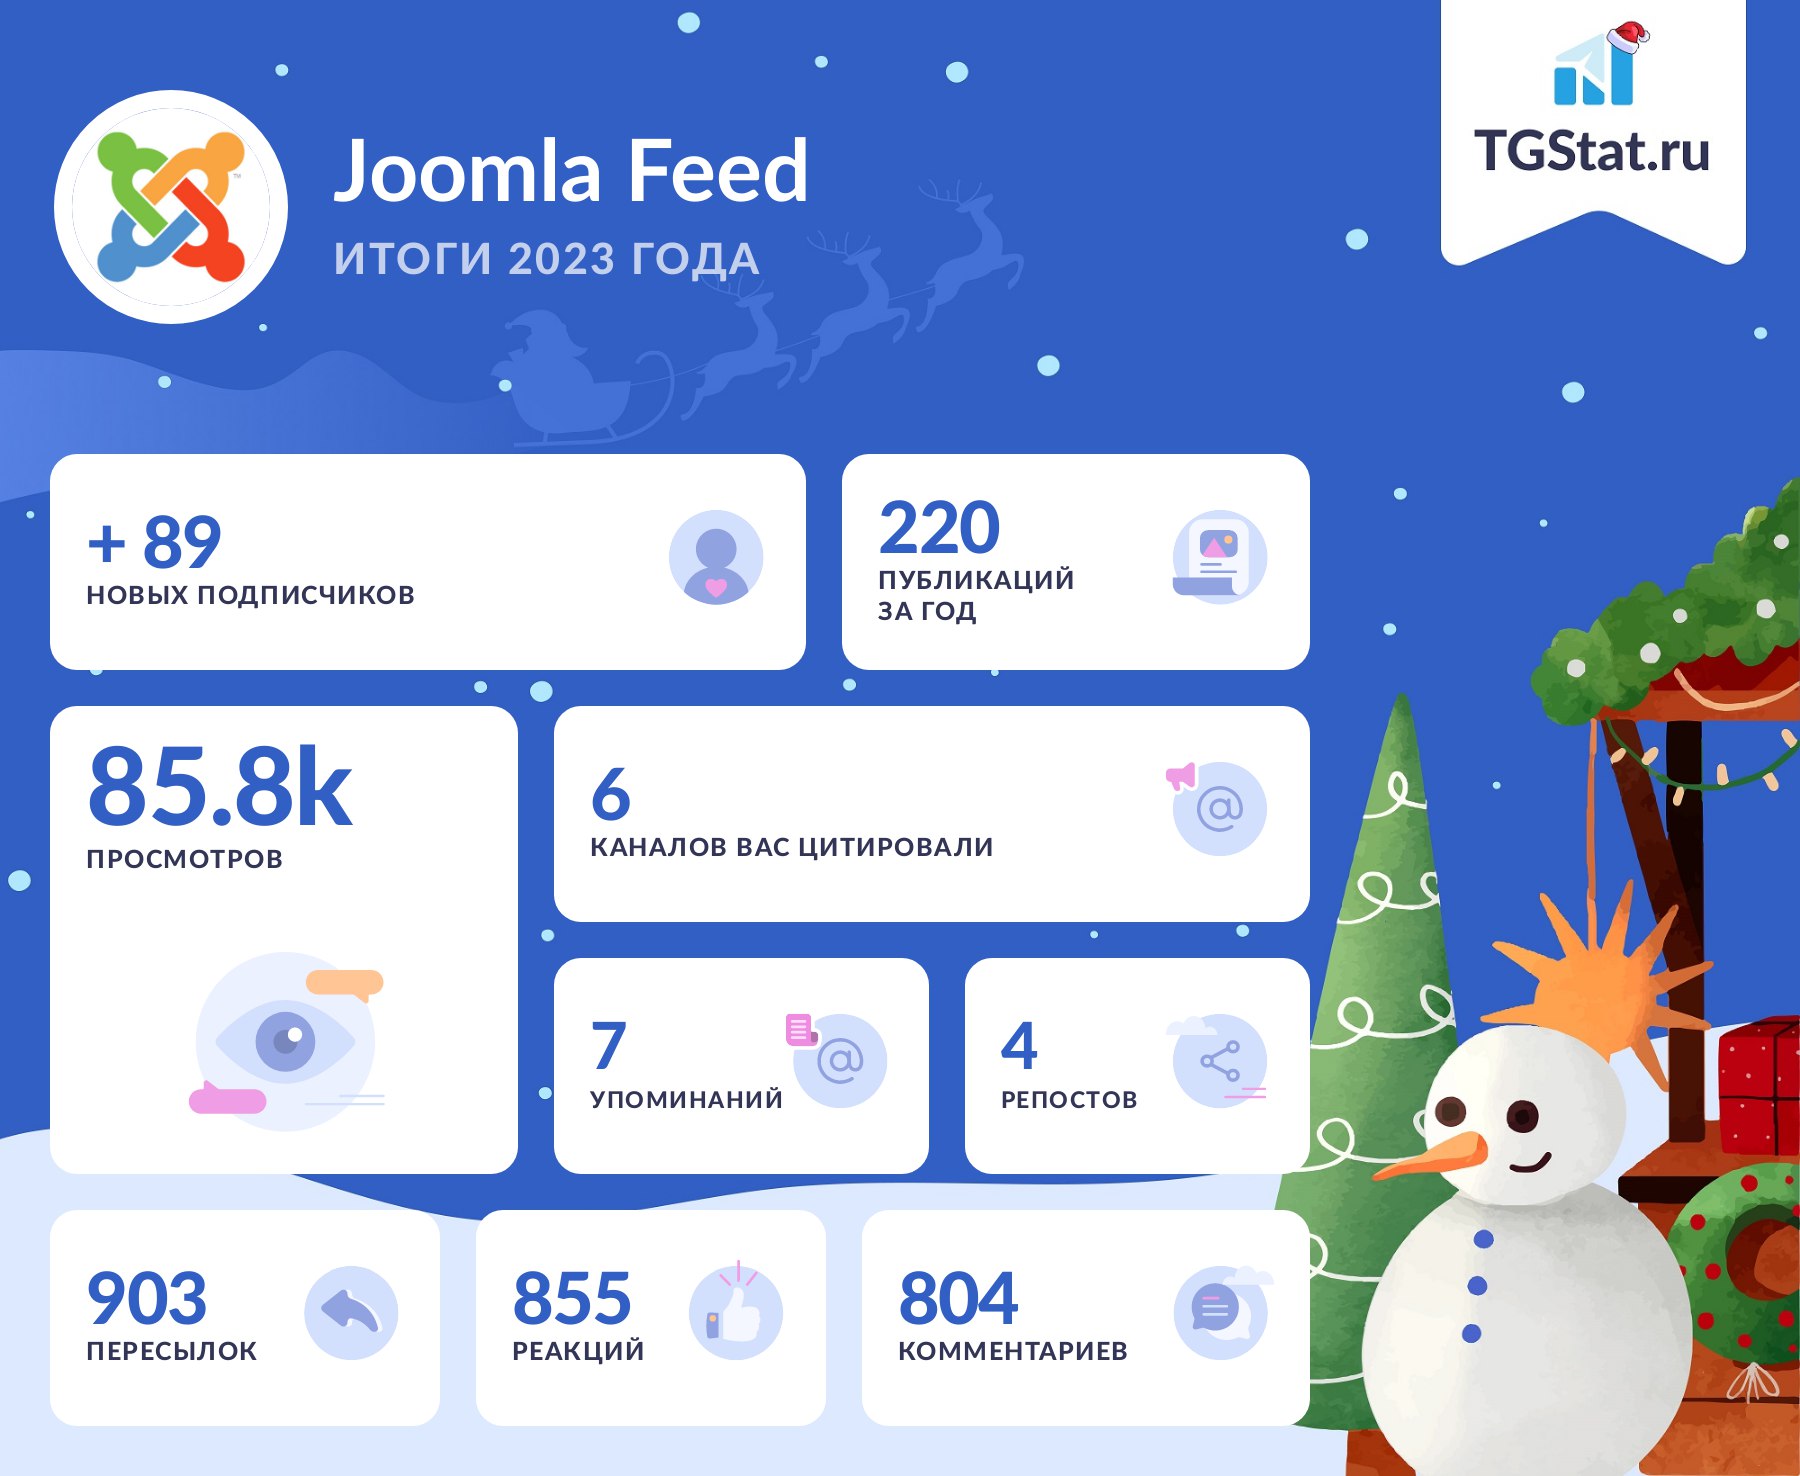 Итоги года для канала "Joomla Feed" от @TGStat